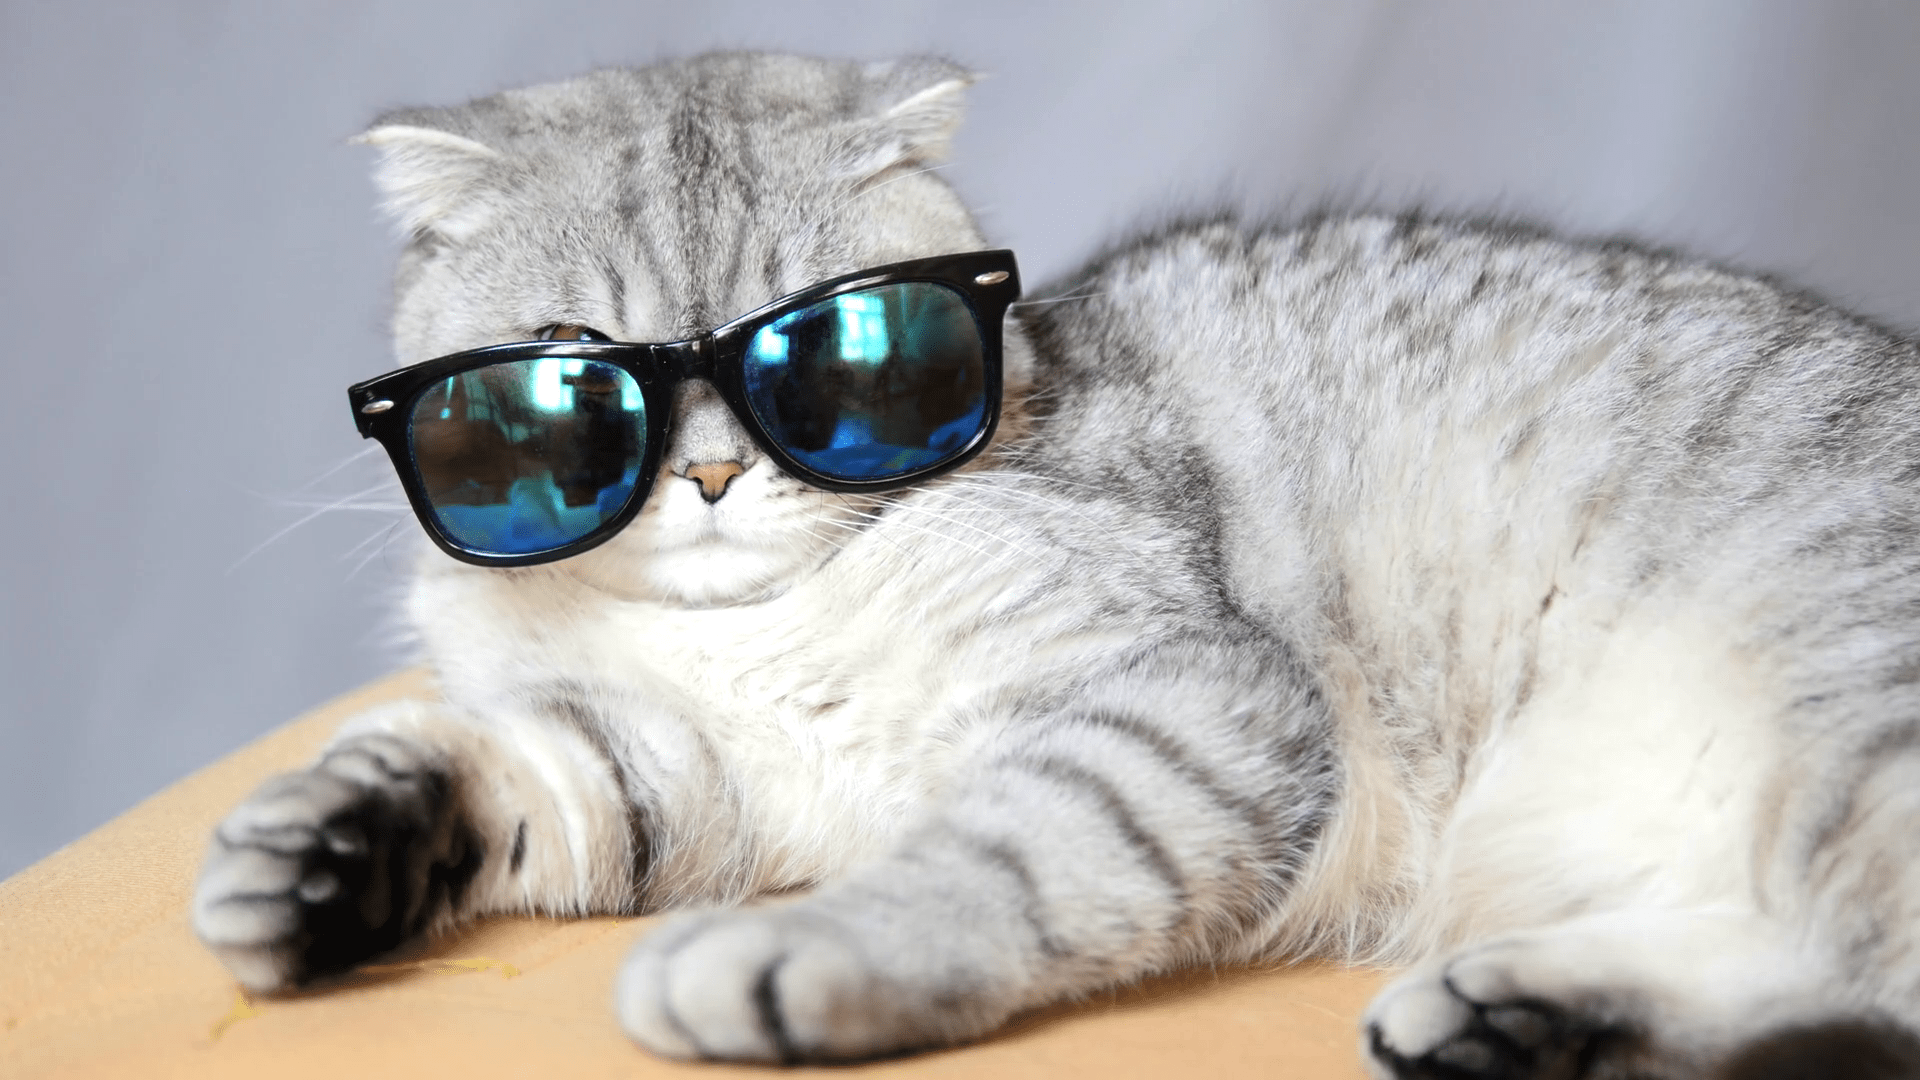 Cat Wearing Glasses Wallpapers - Top Free Cat Wearing Glasses